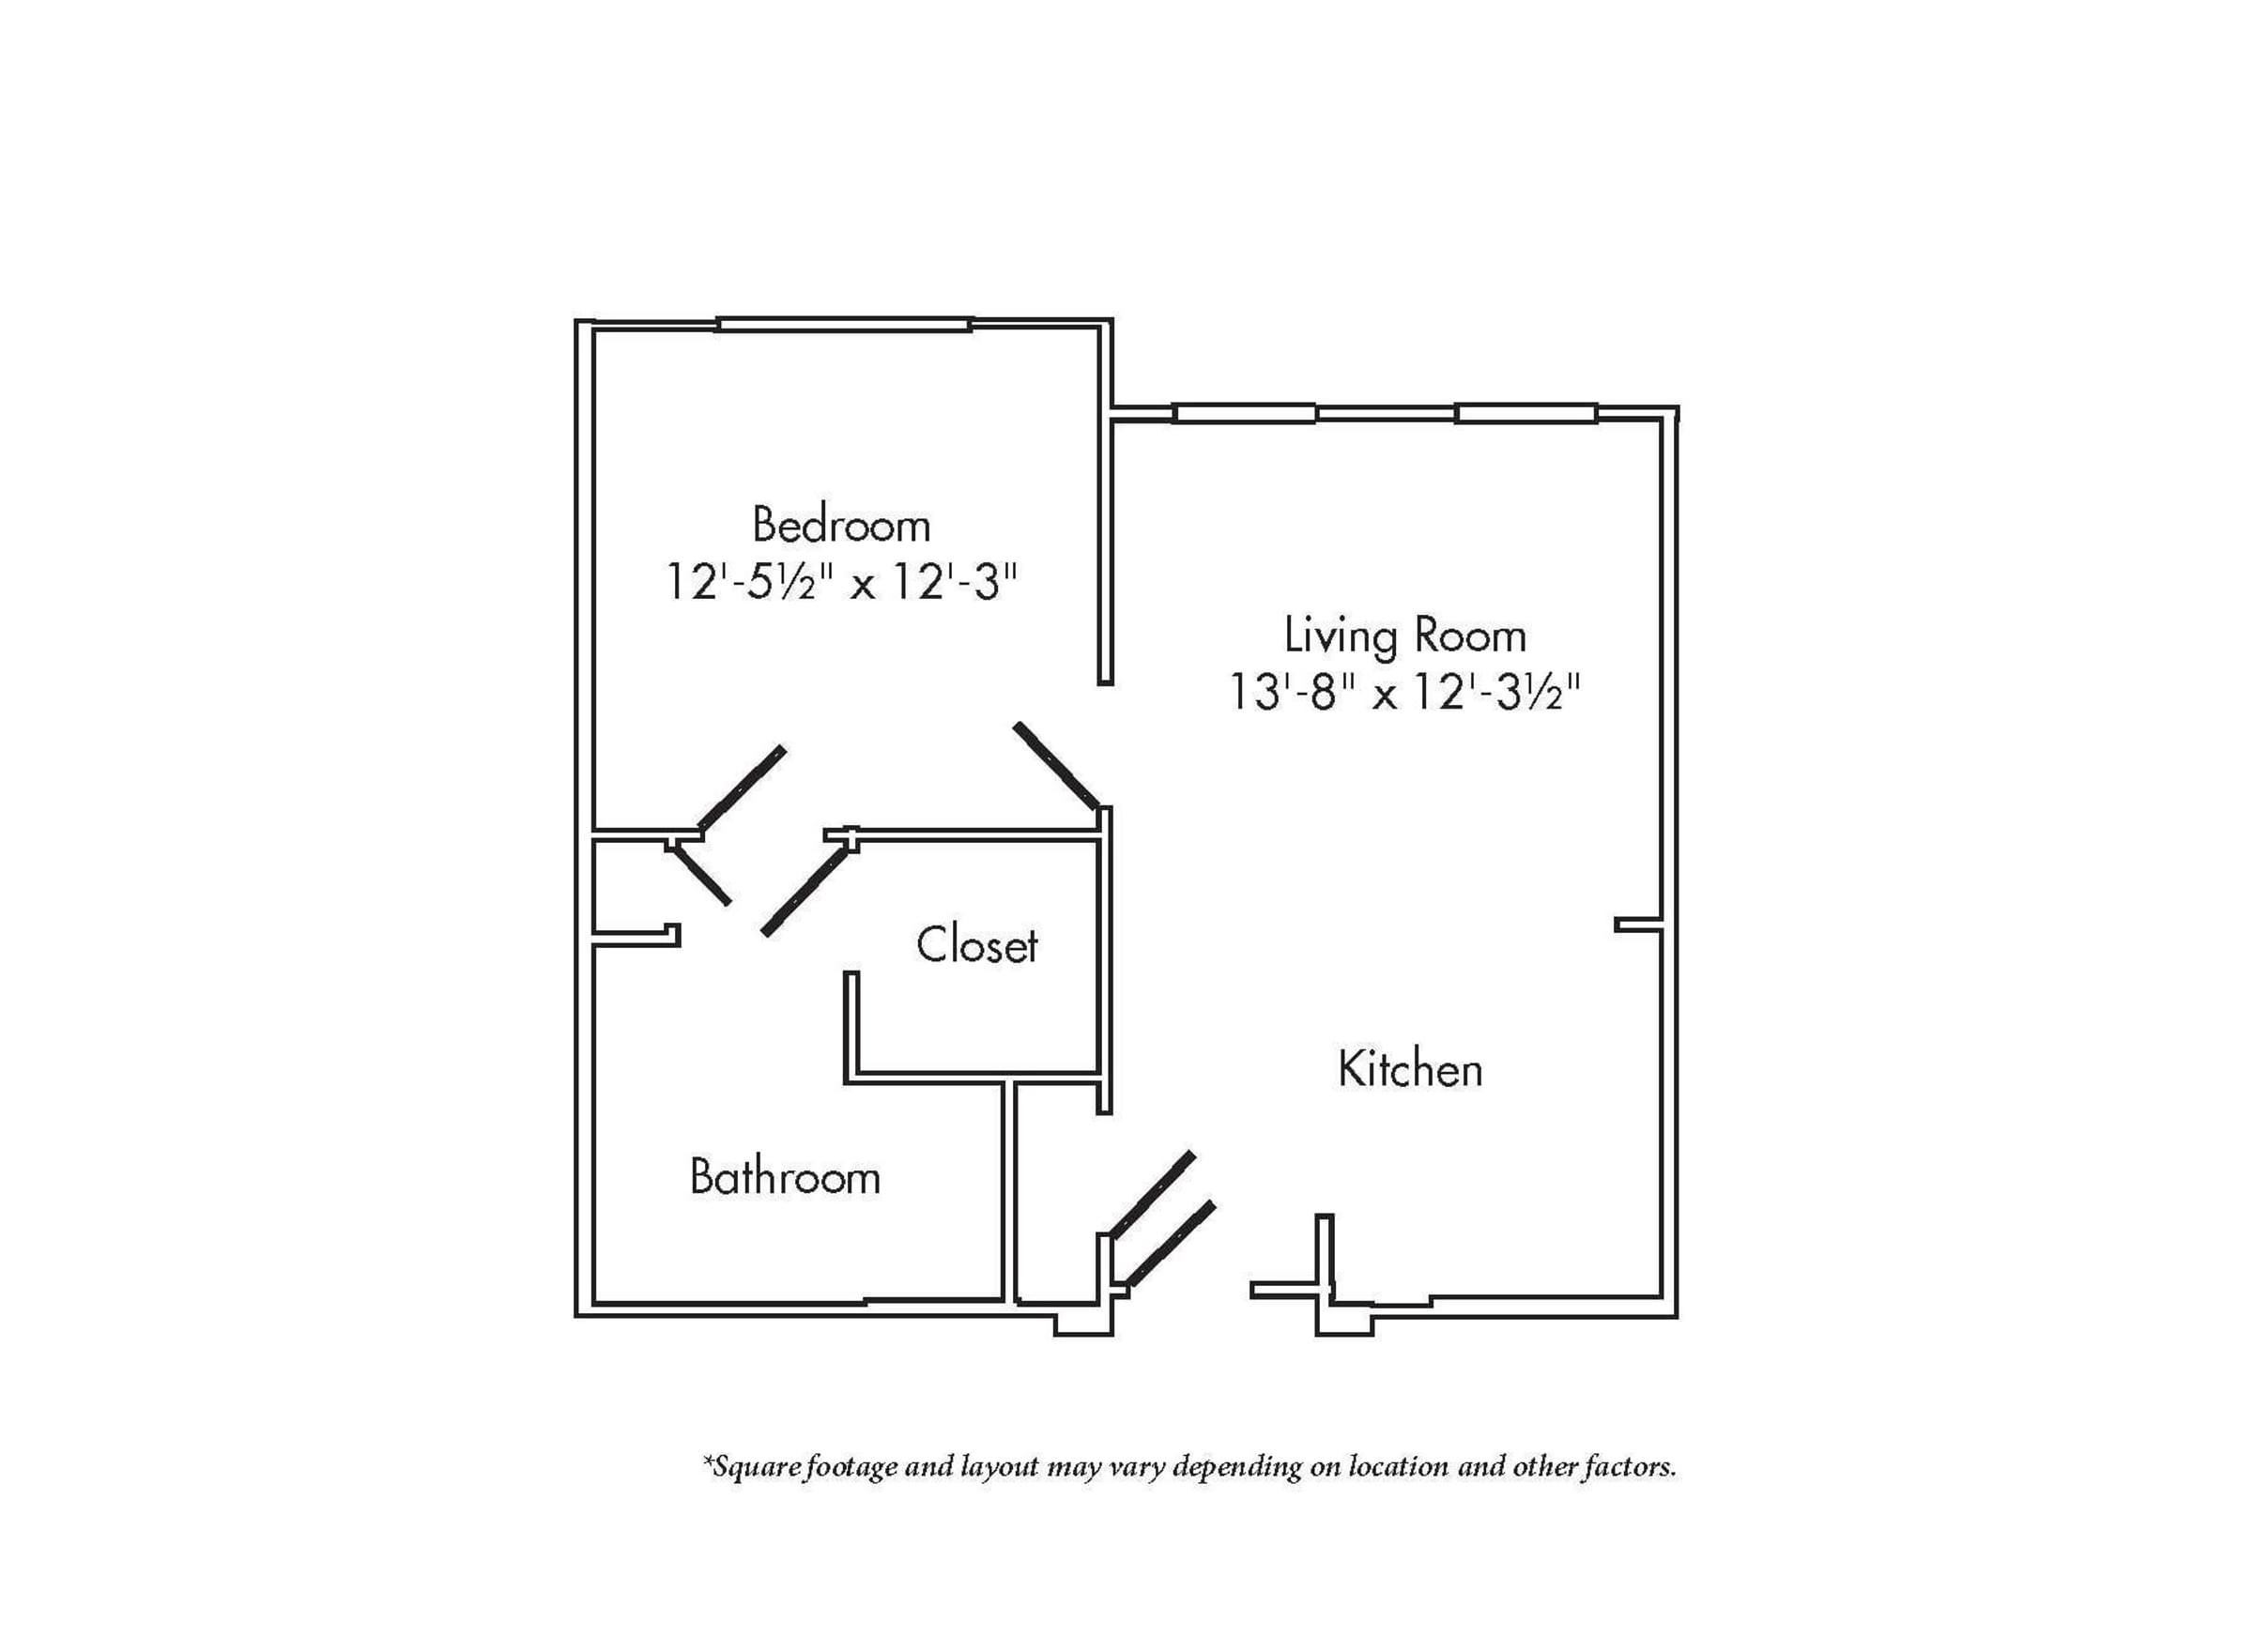 The Claiborne at Thibodaux senior living community one-bedroom floor plan